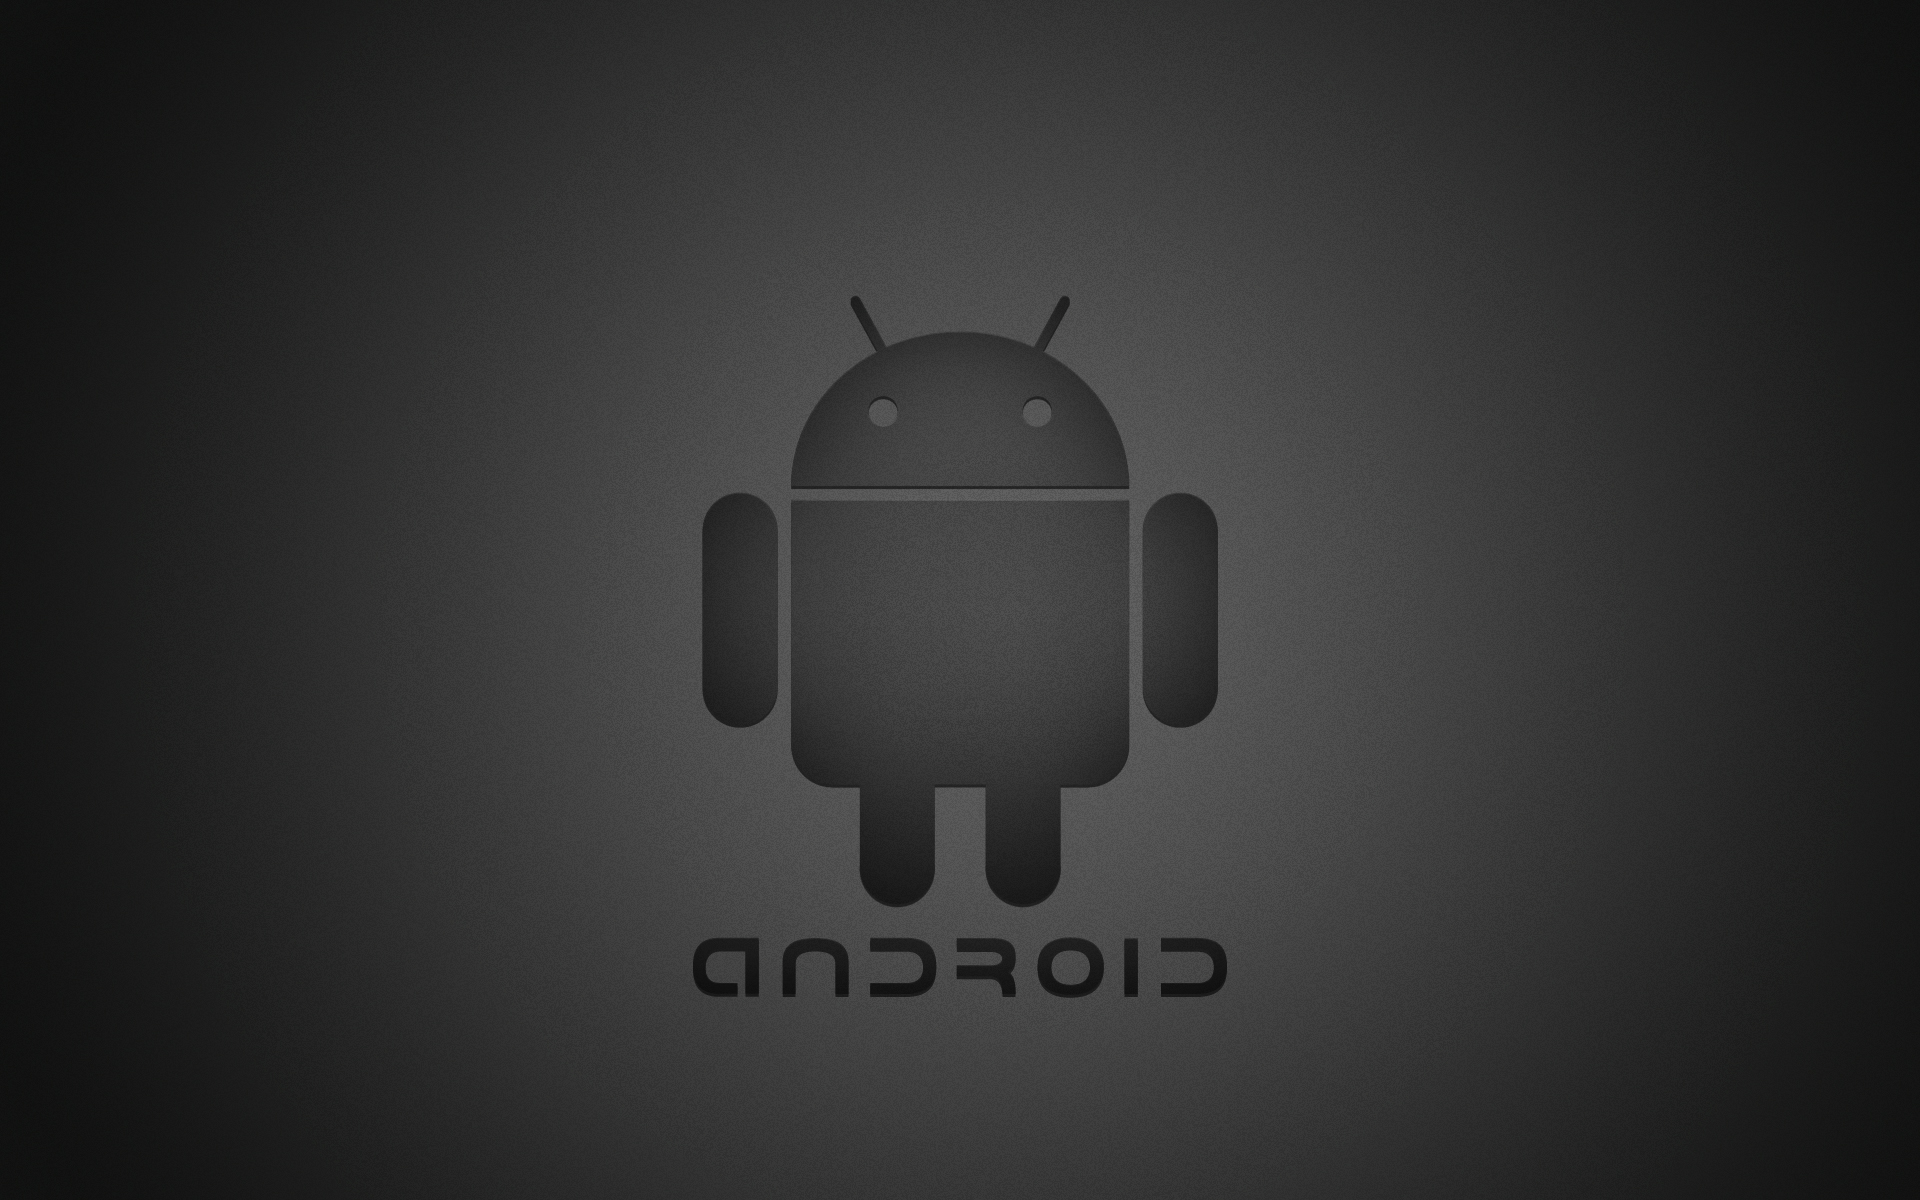 26418d1271837589 android desktop wallpaper androidjpg 1920x1200